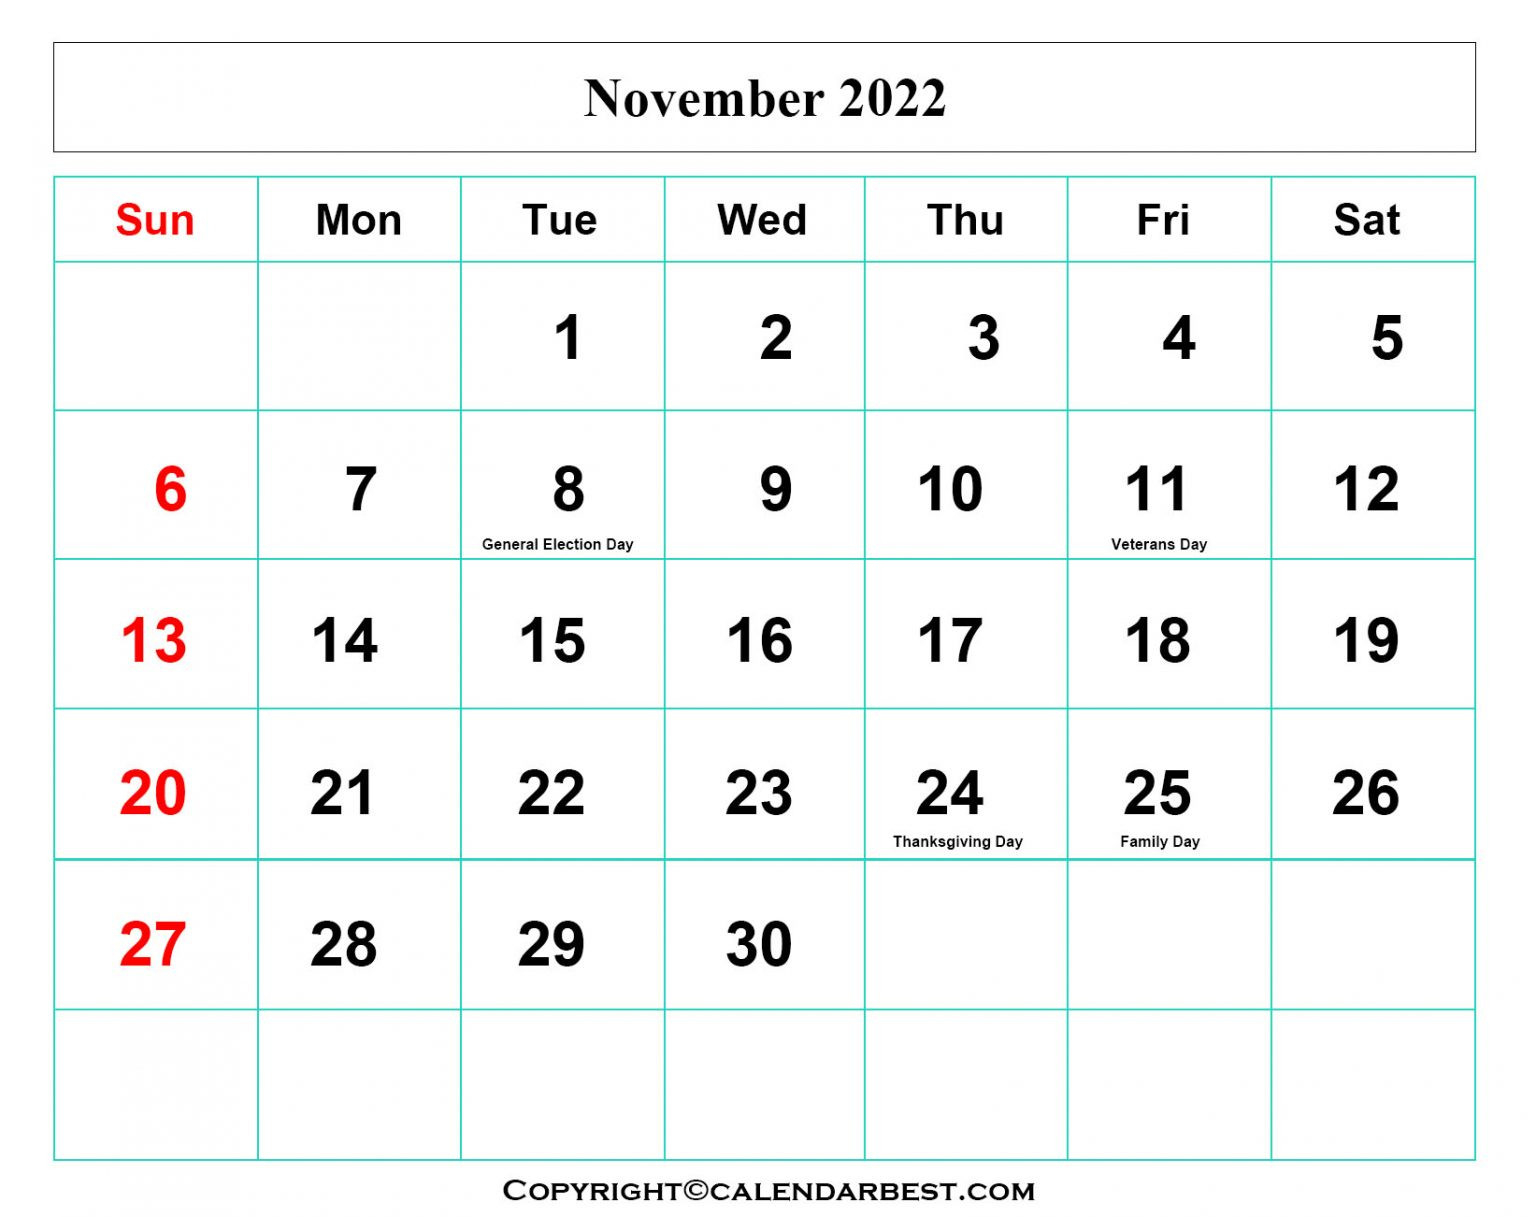 Free Printable November Calendar 2022 With Holidays  November And December 2022 Calendar